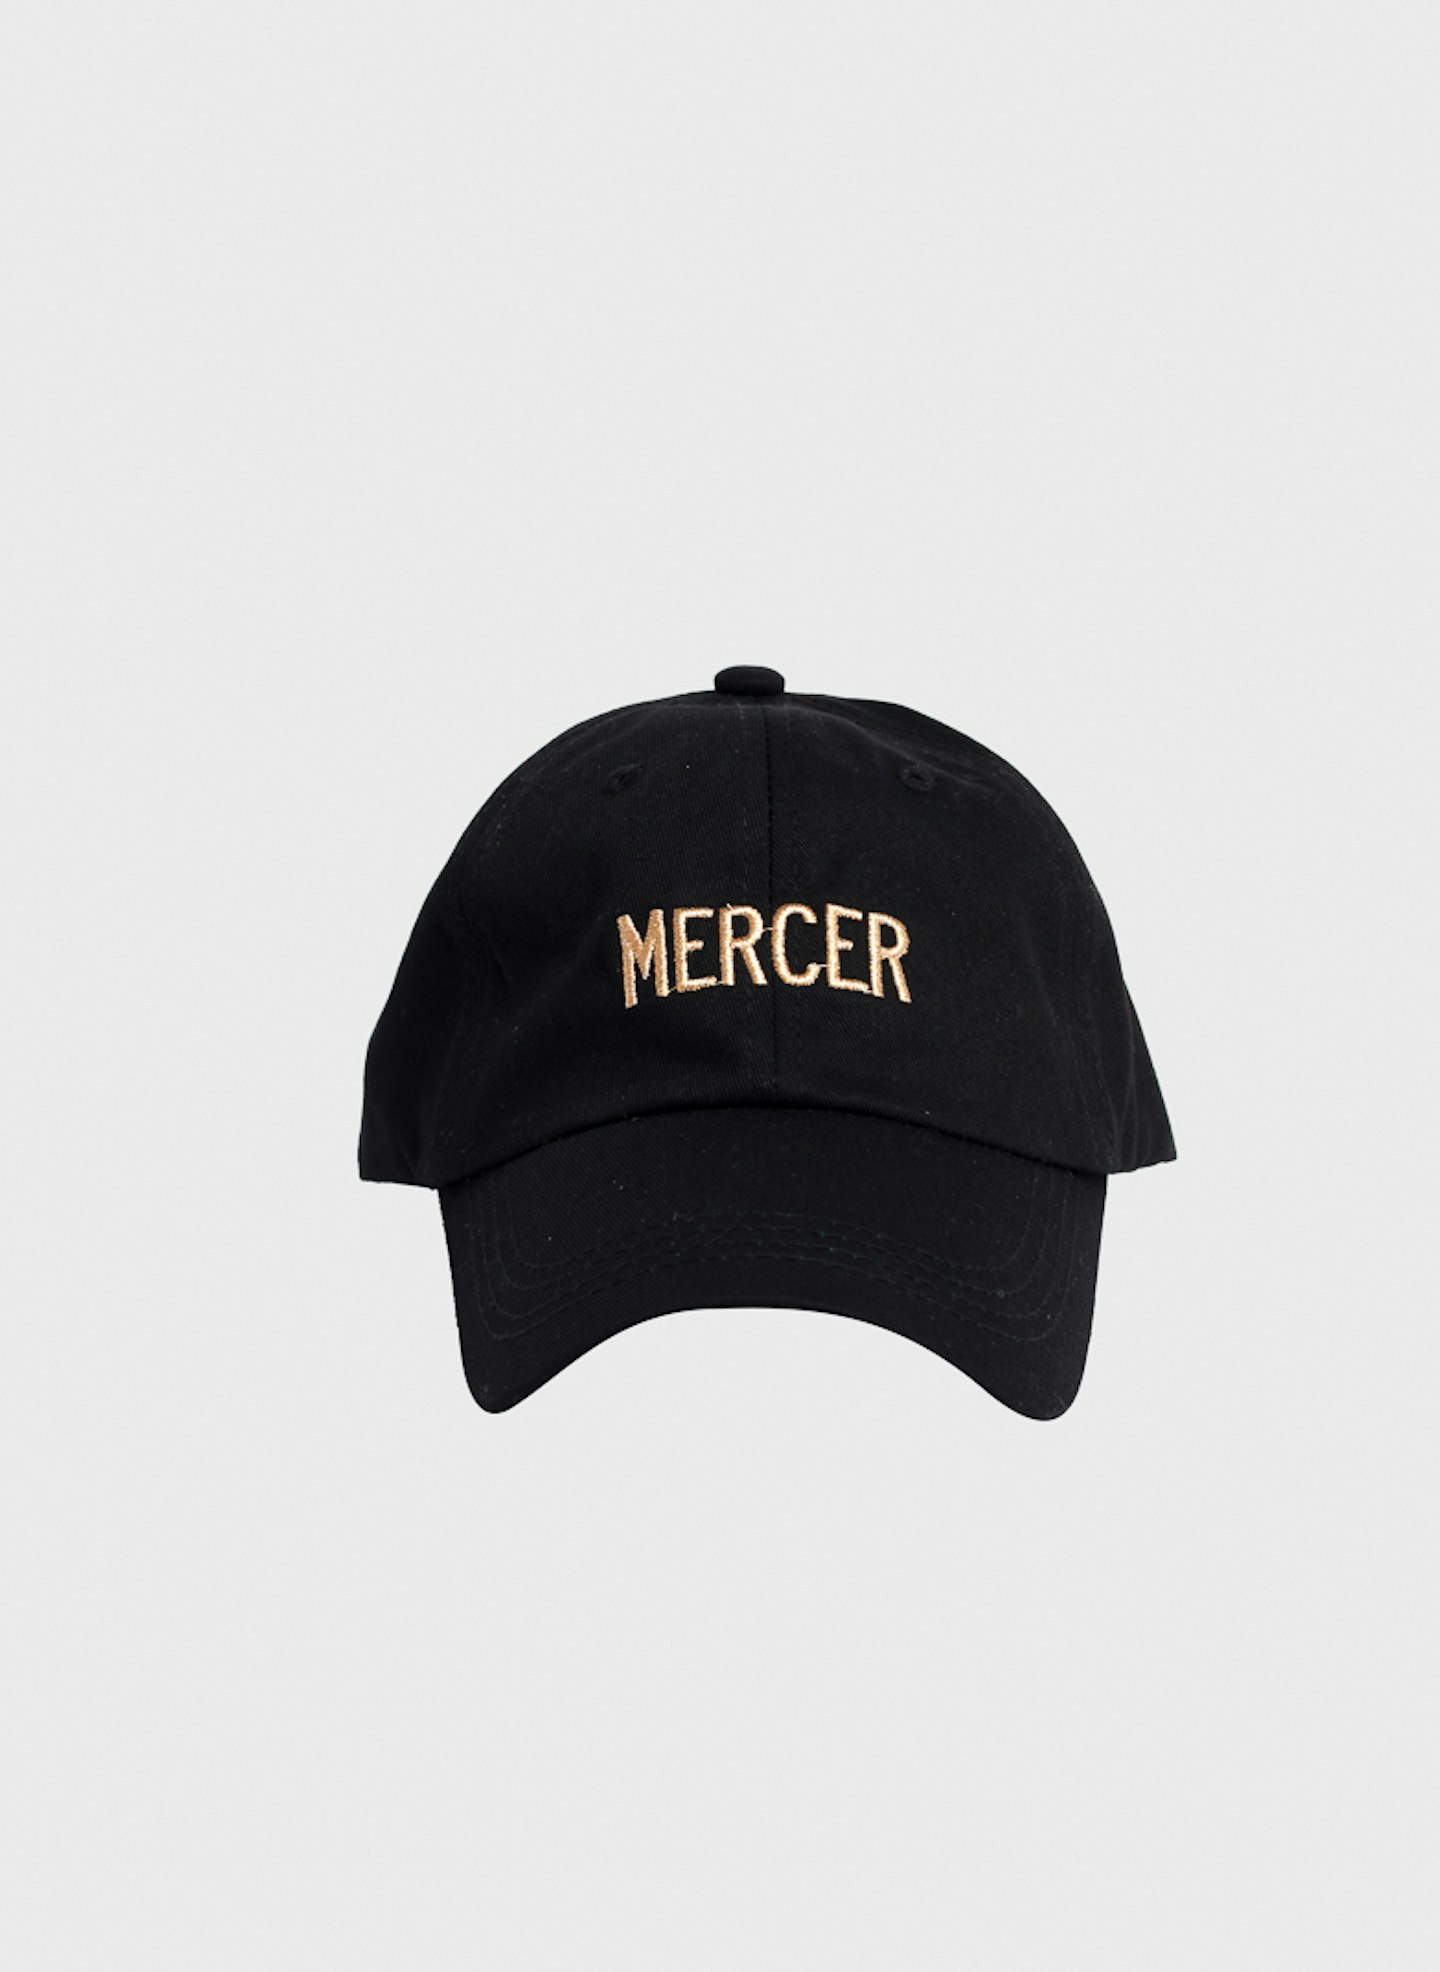 The Best Varsity Pieces - Mercer Cap